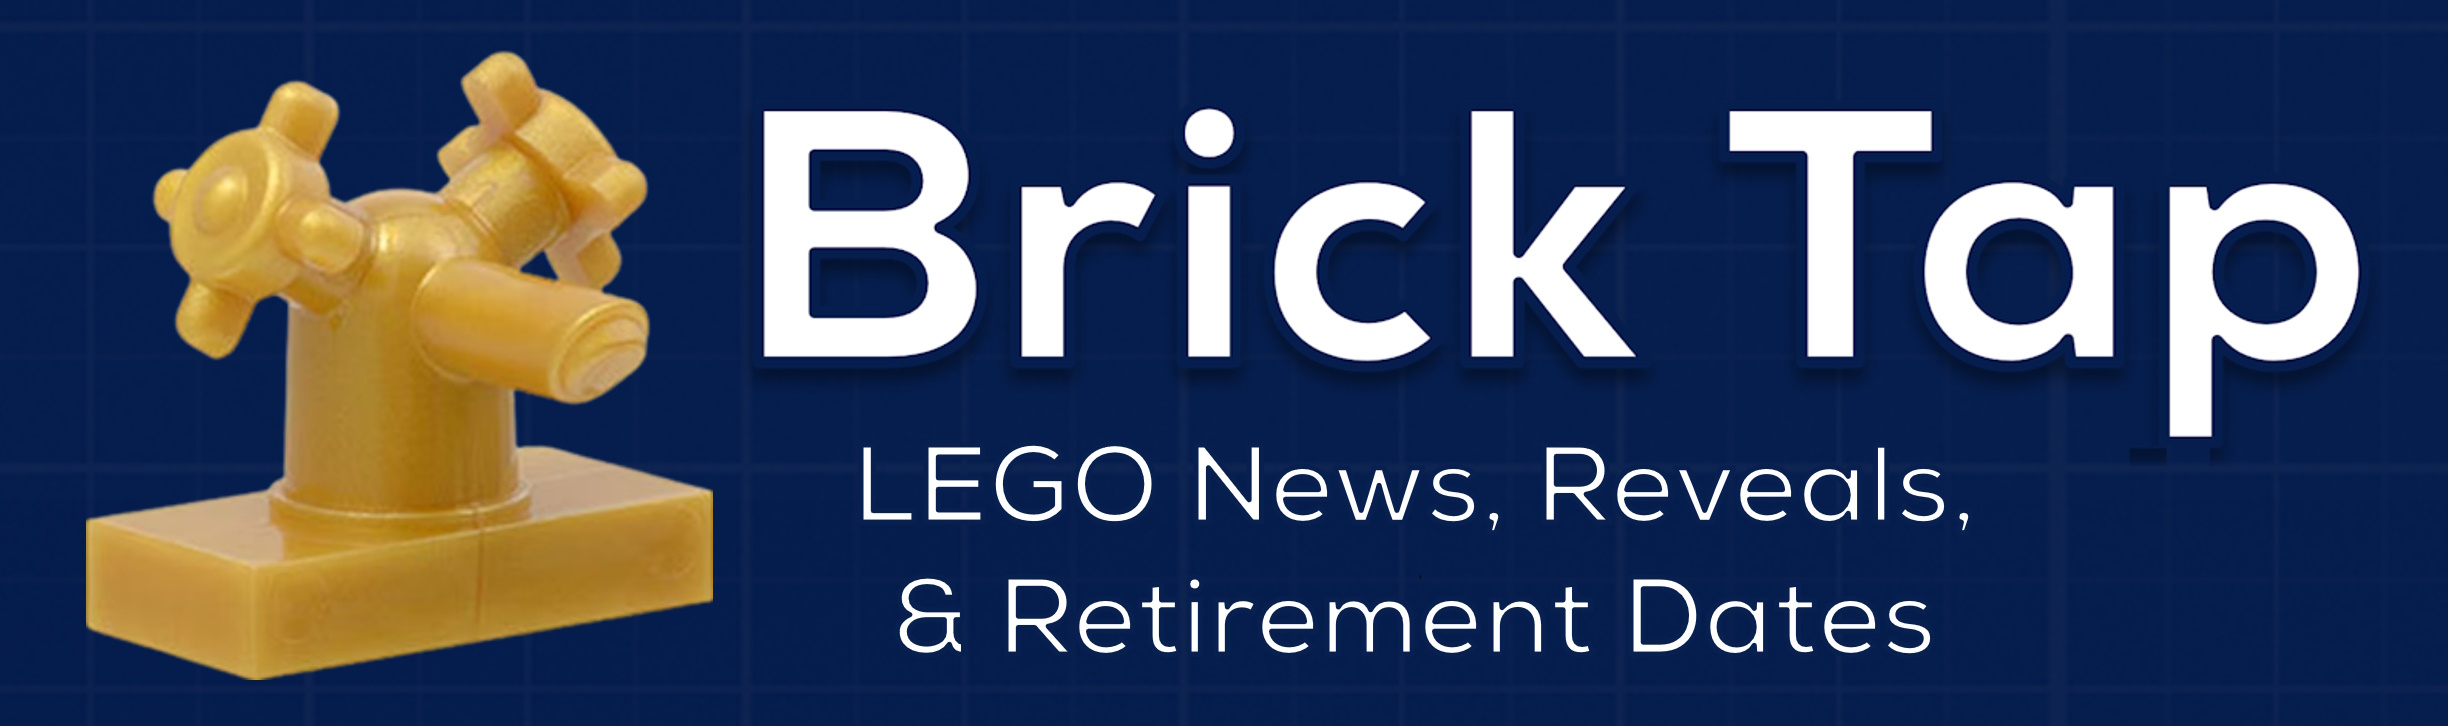 Brick Tap: LEGO News, Rumors, and Reveals